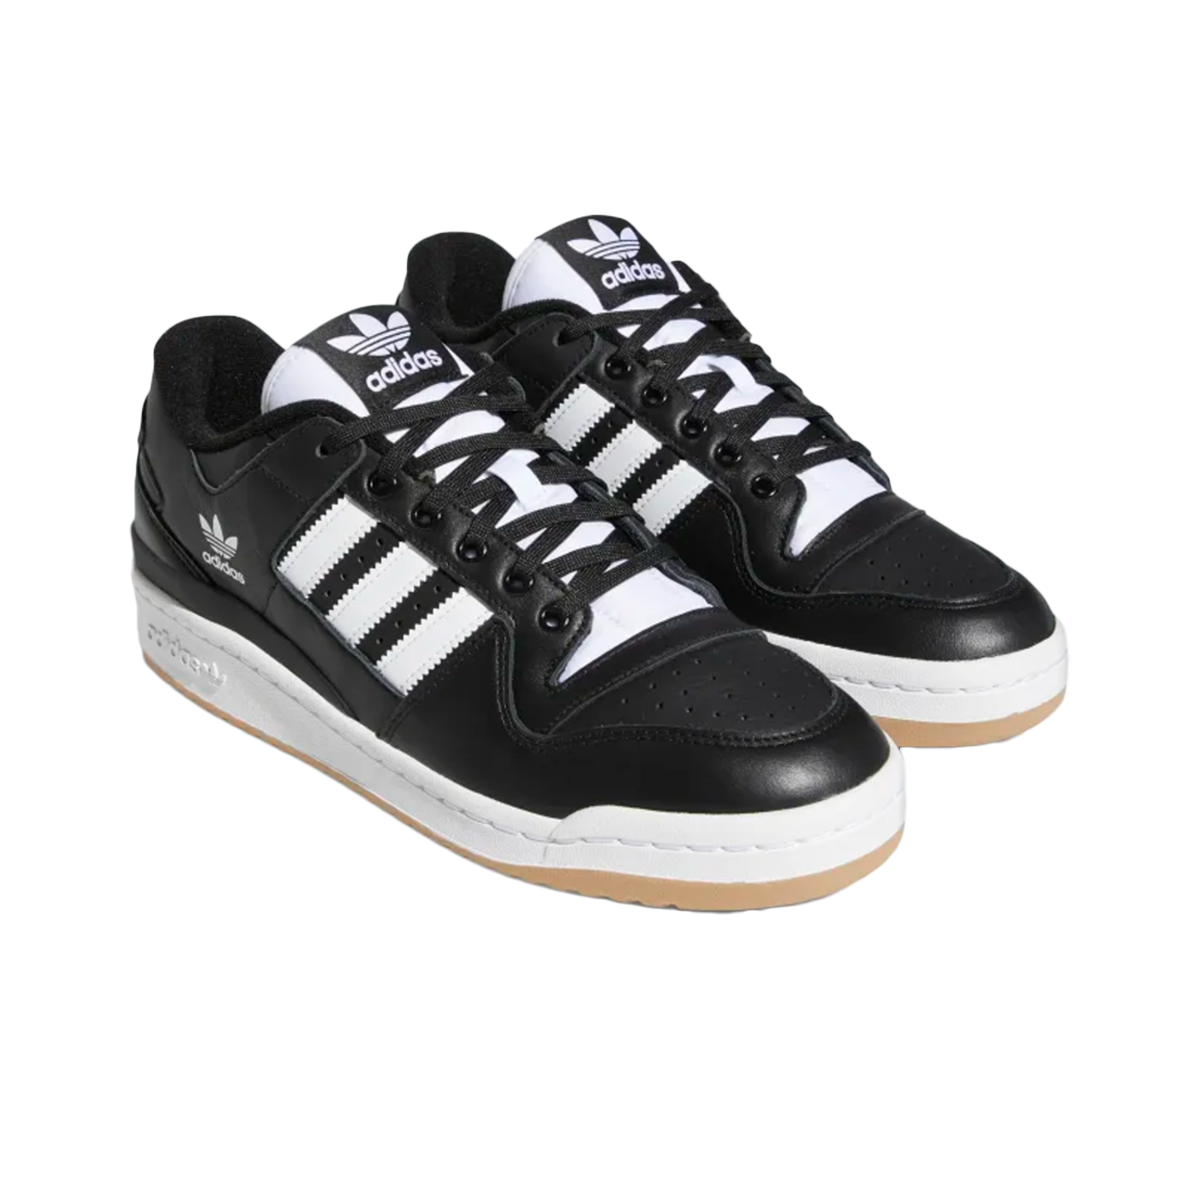 Adidas Forum 84 Low ADV Shoes - Core Black / Core White